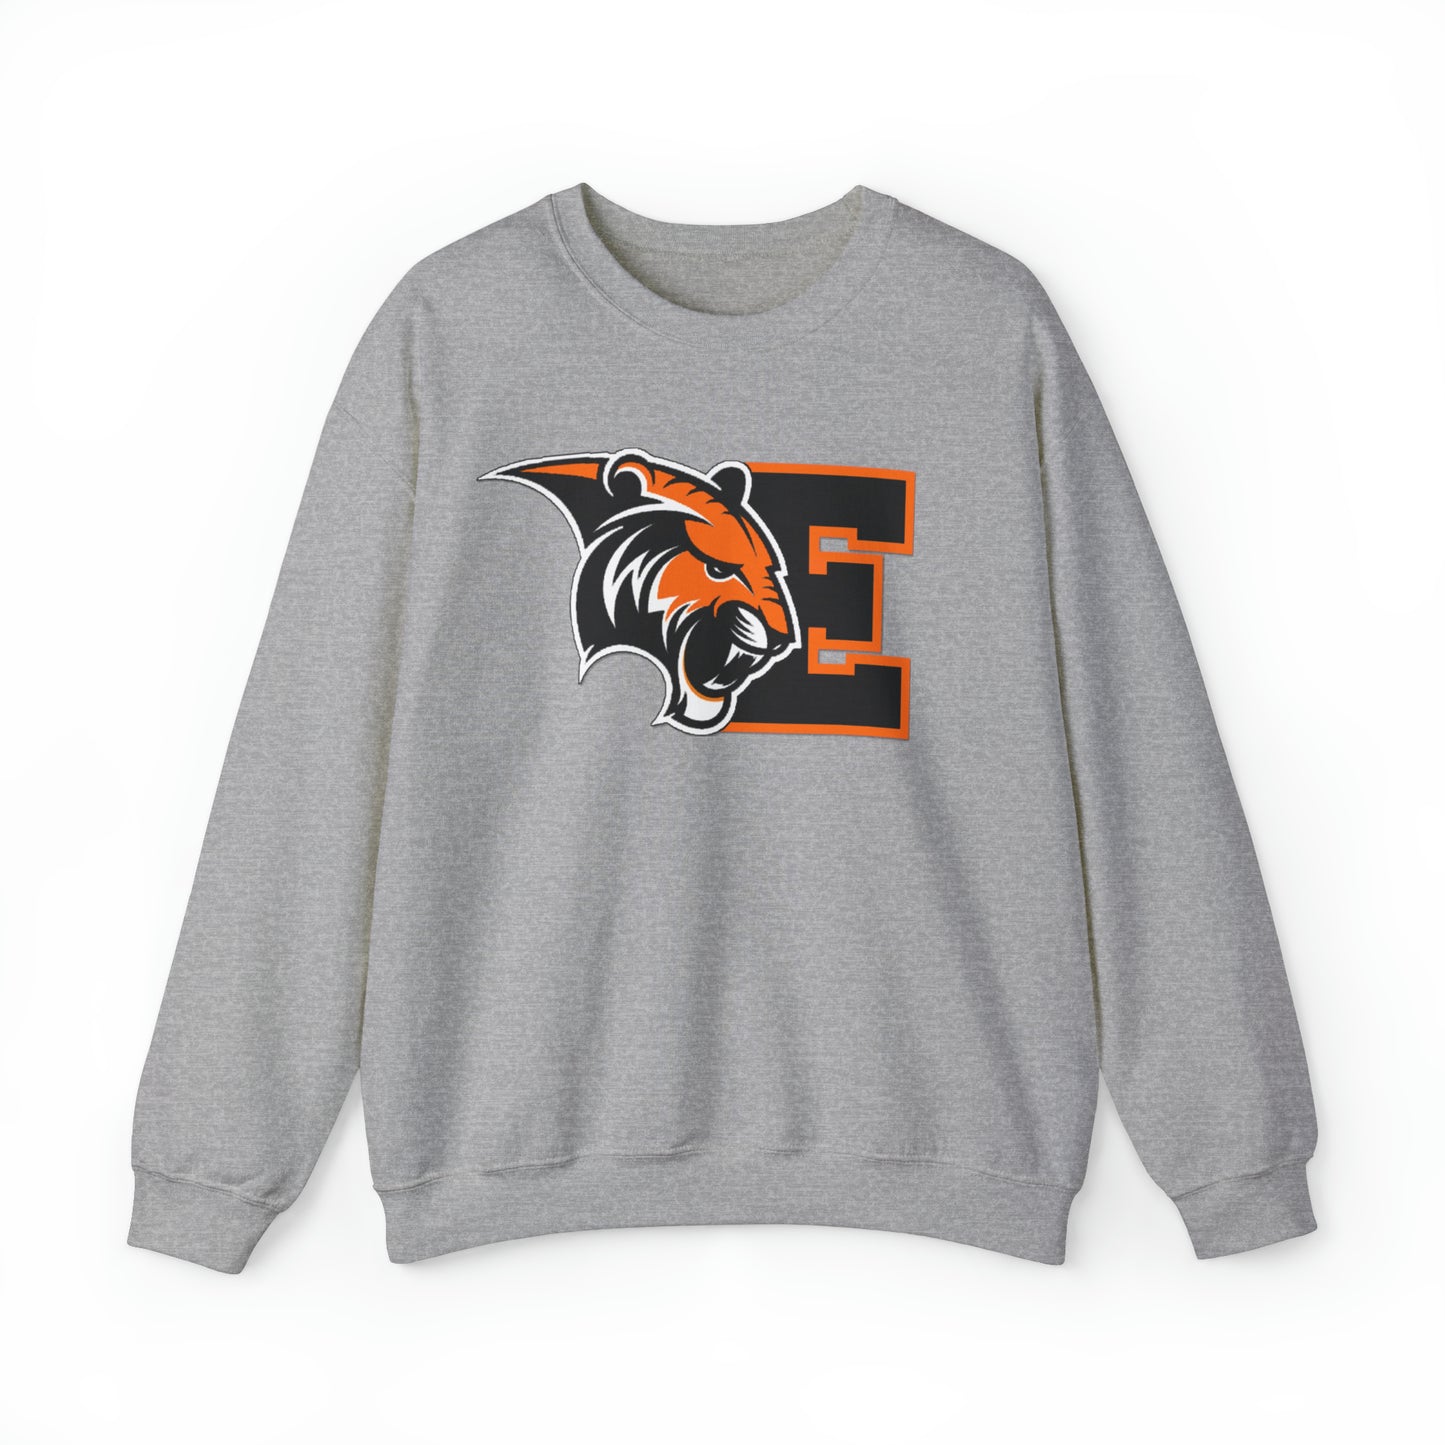 Erie Tigers Unisex Crewneck Sweatshirt